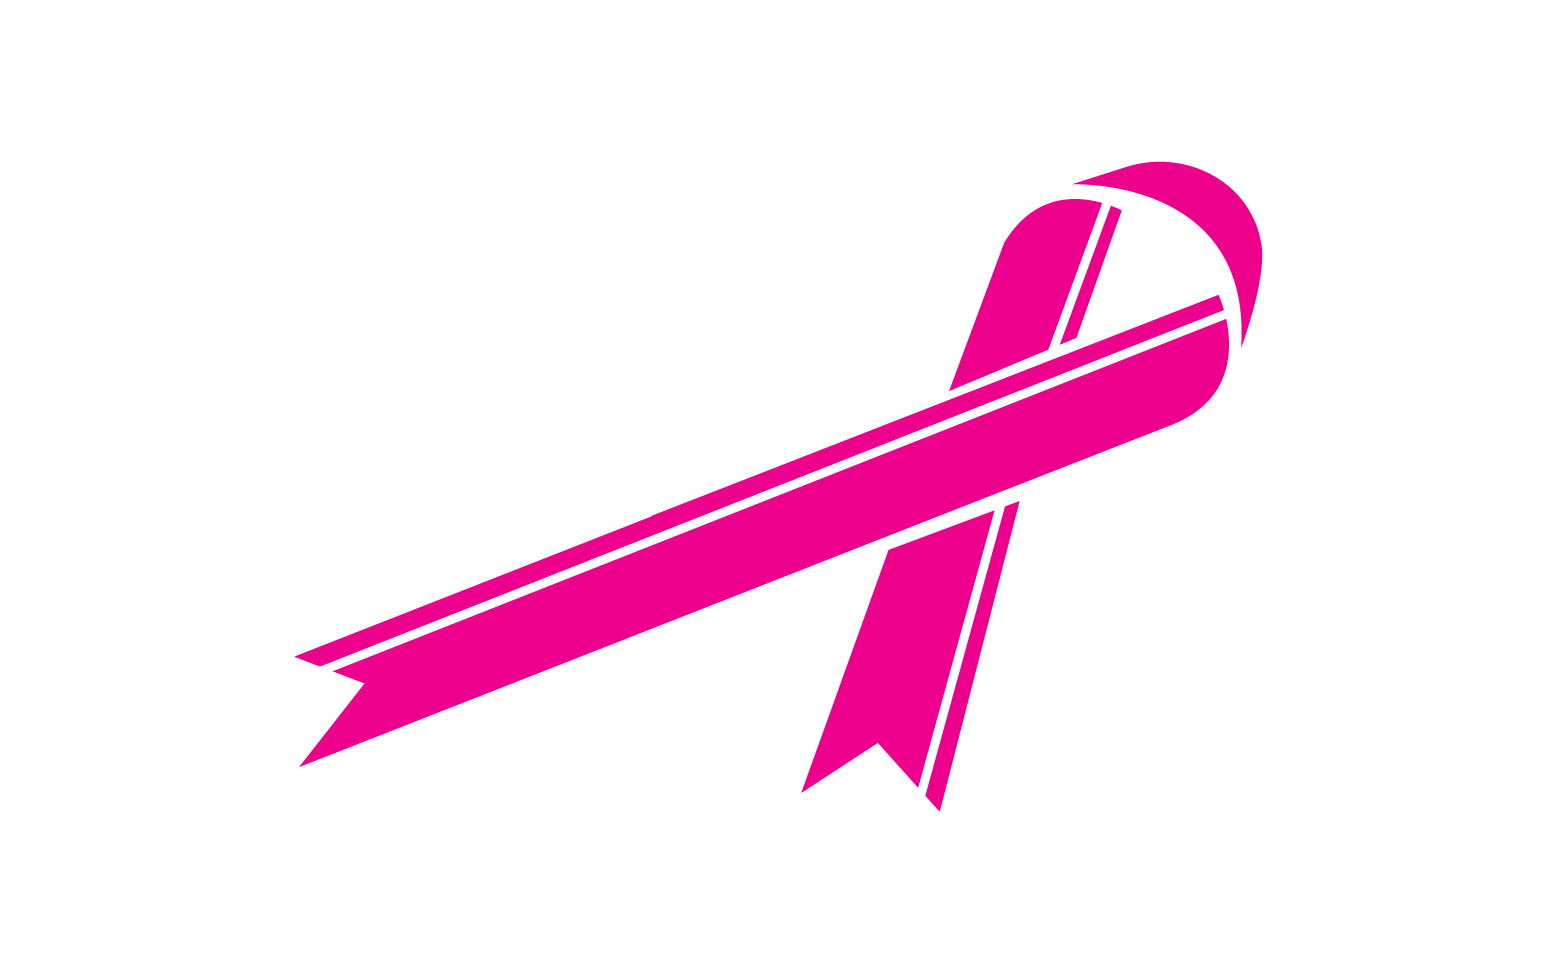 Ribbon pink icon logo element version v59